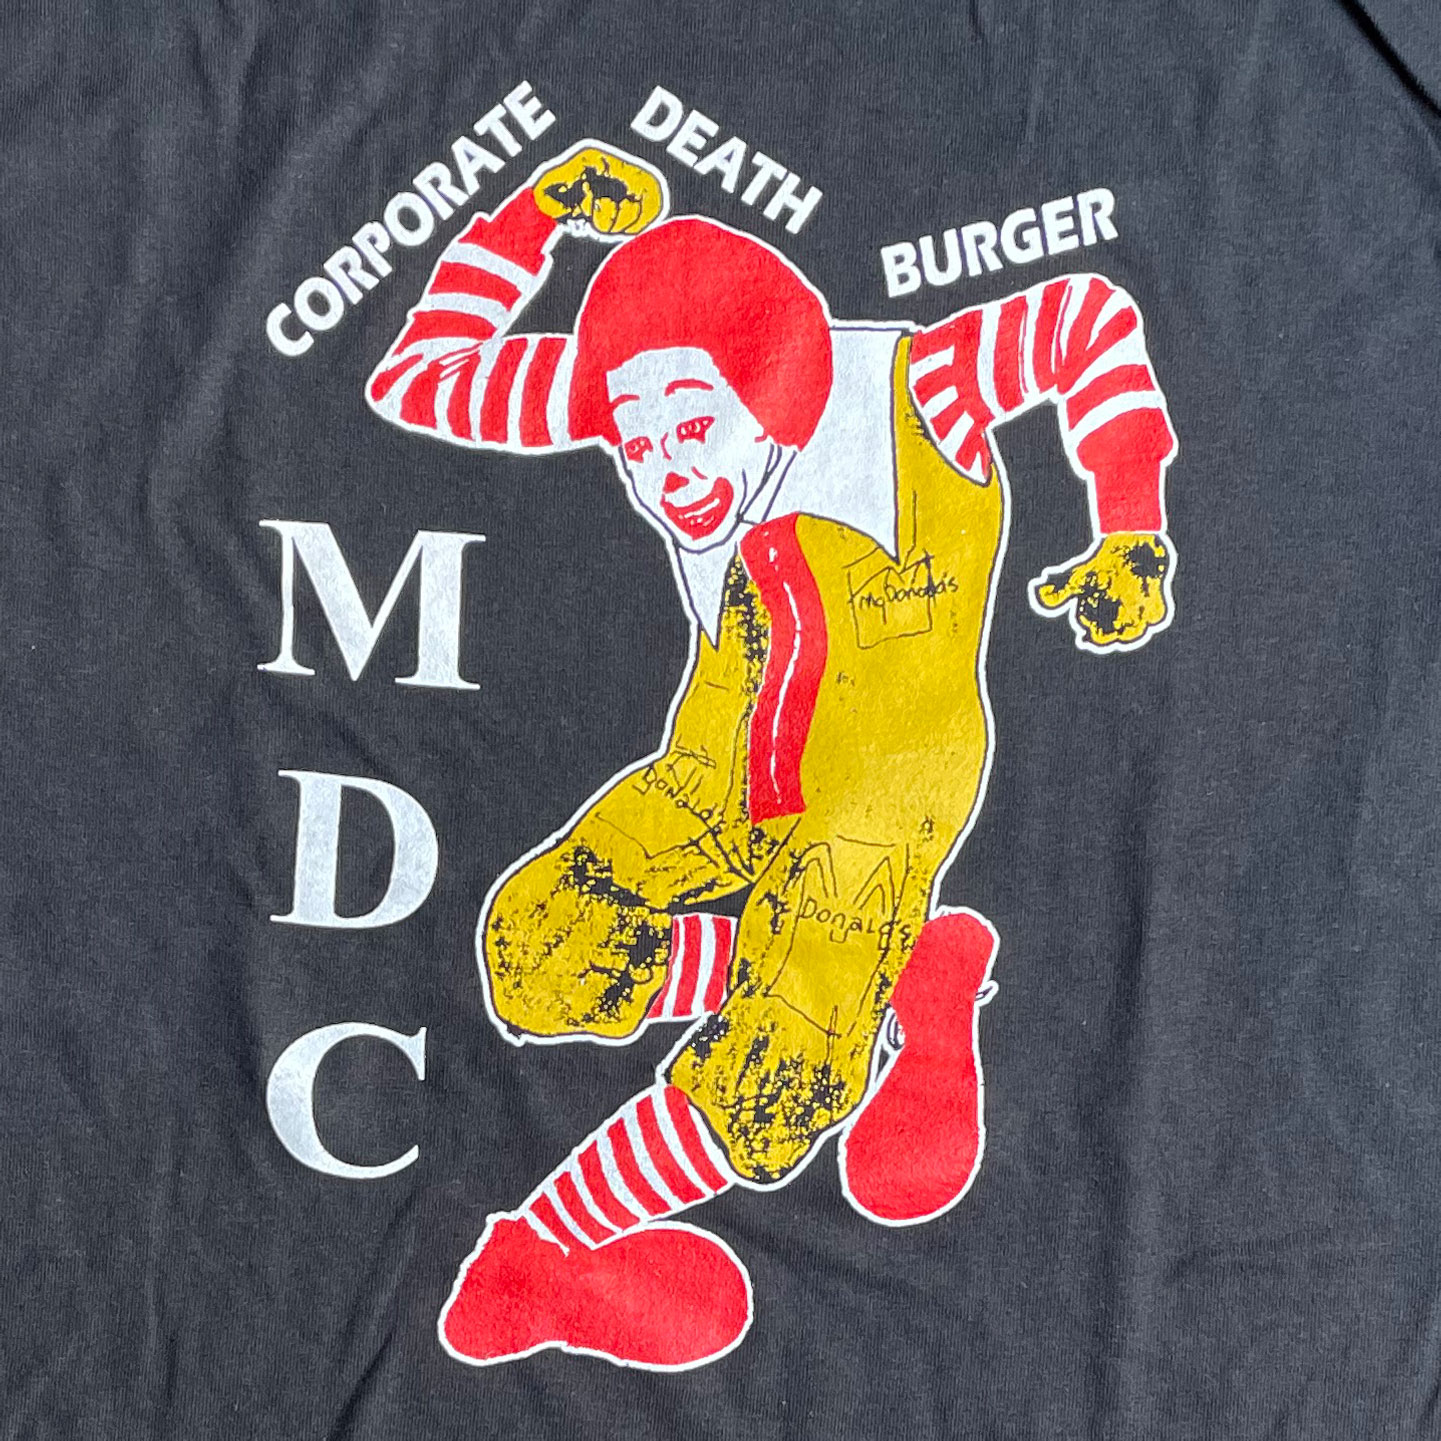 MDC Tシャツ CORPORATE DEATH BURGER 3